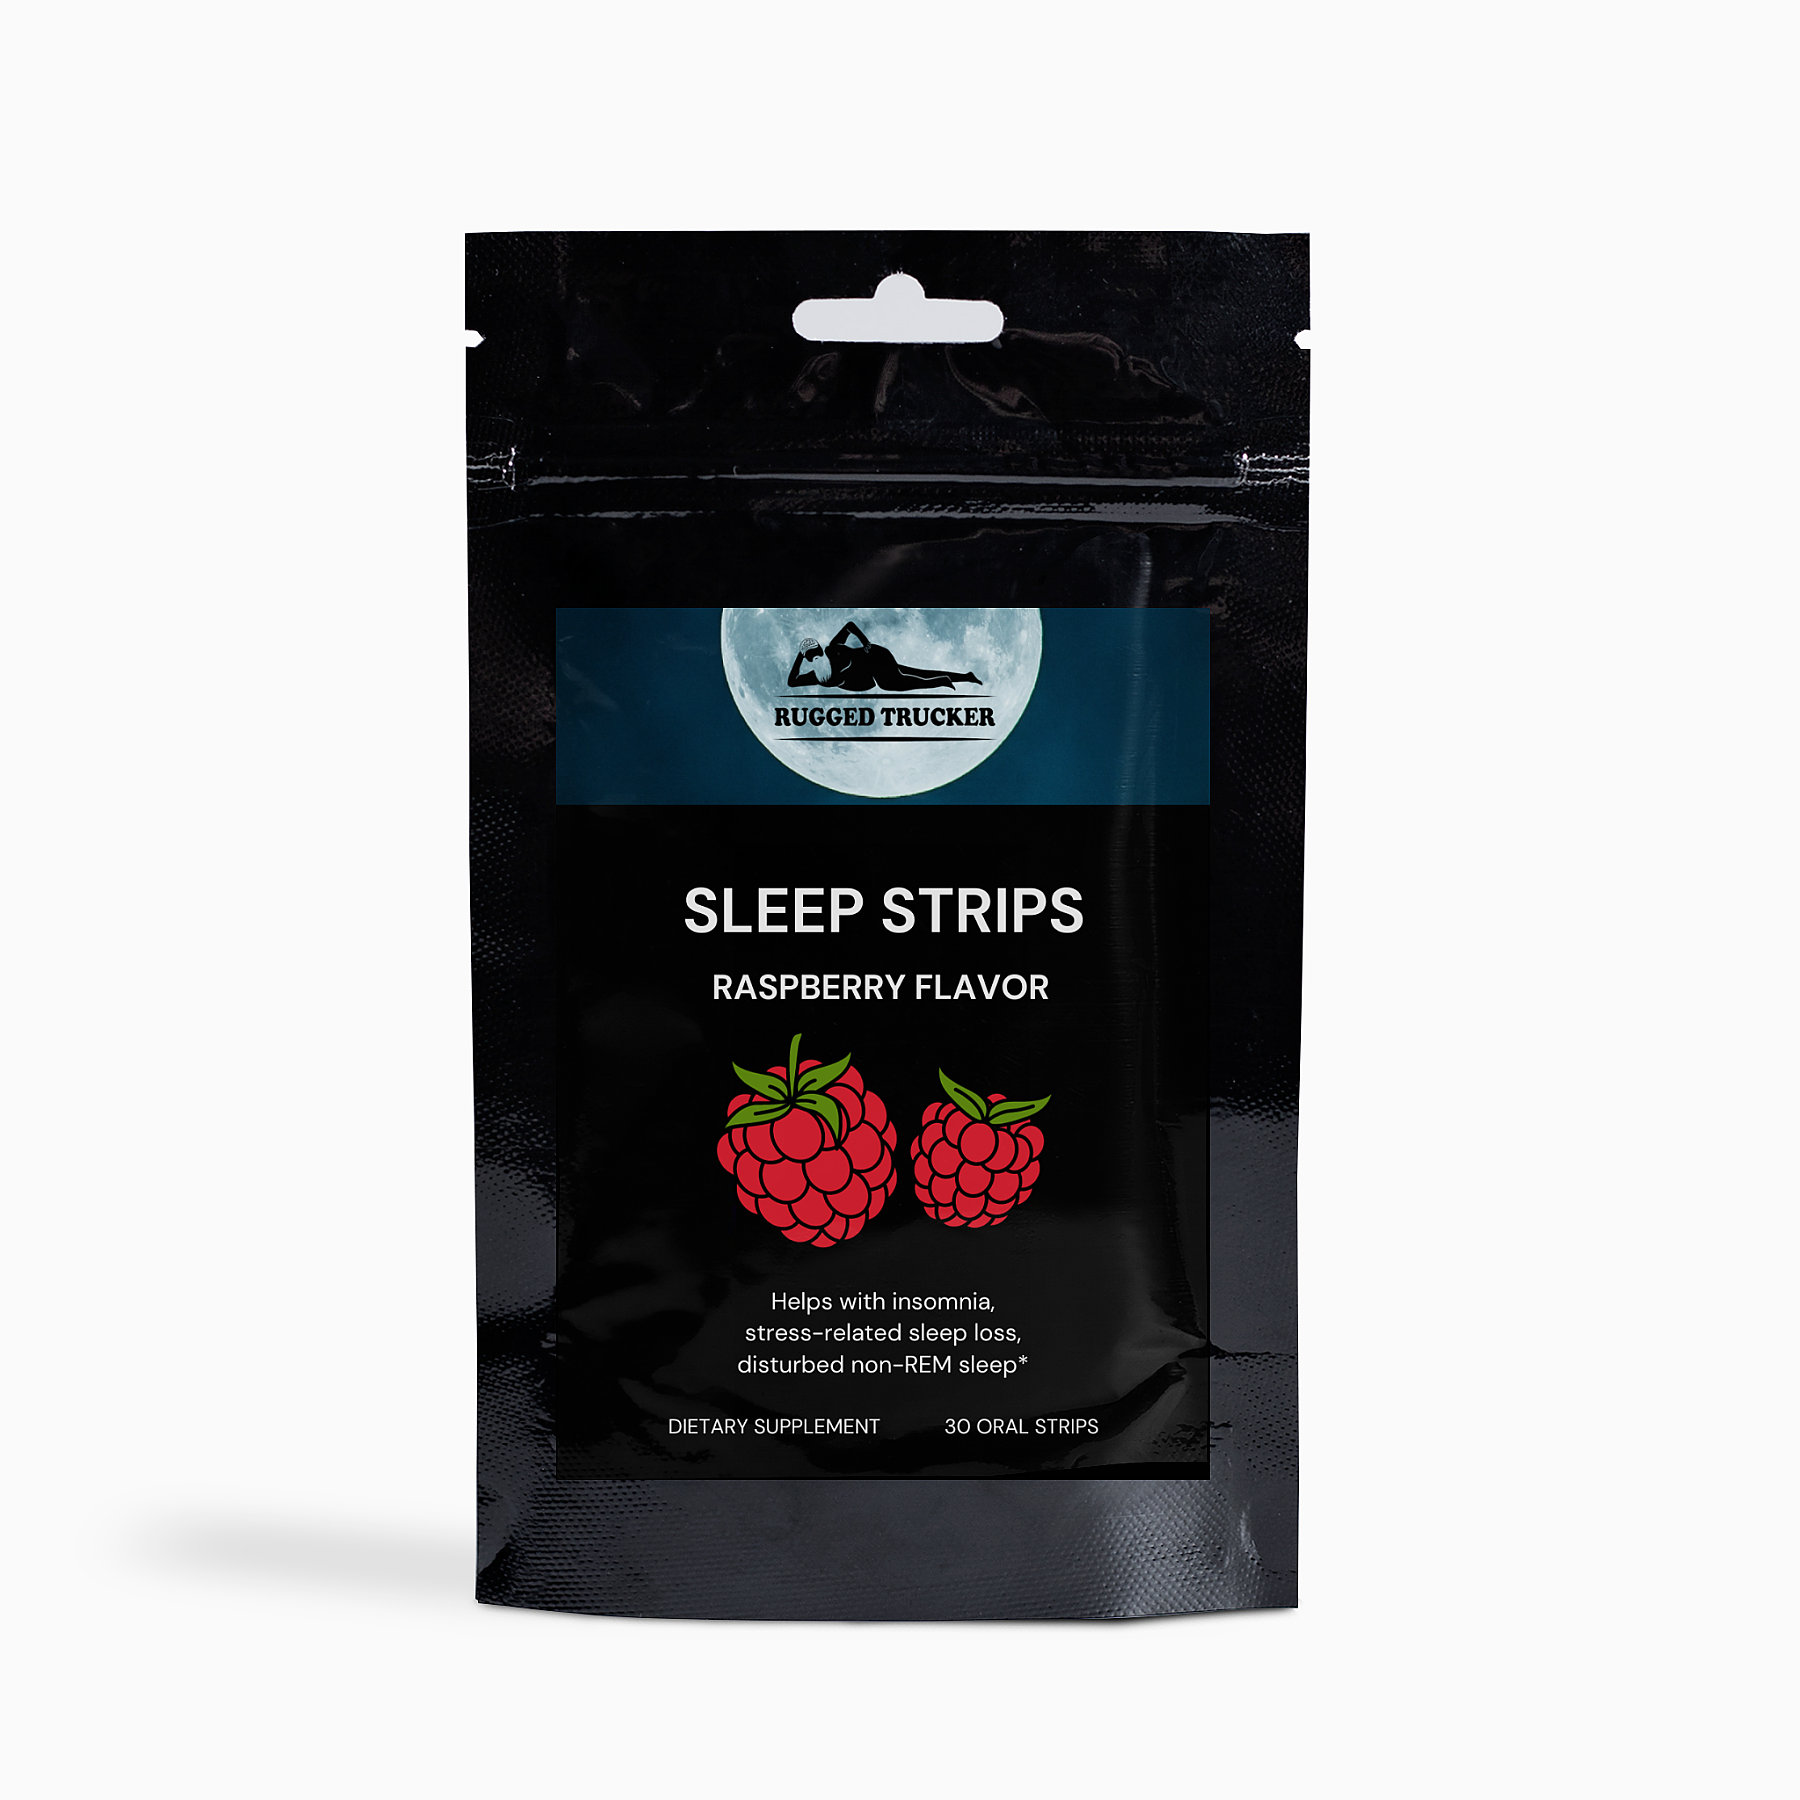 Rugged Trucker's Sleep Strips Raspberry Flavor